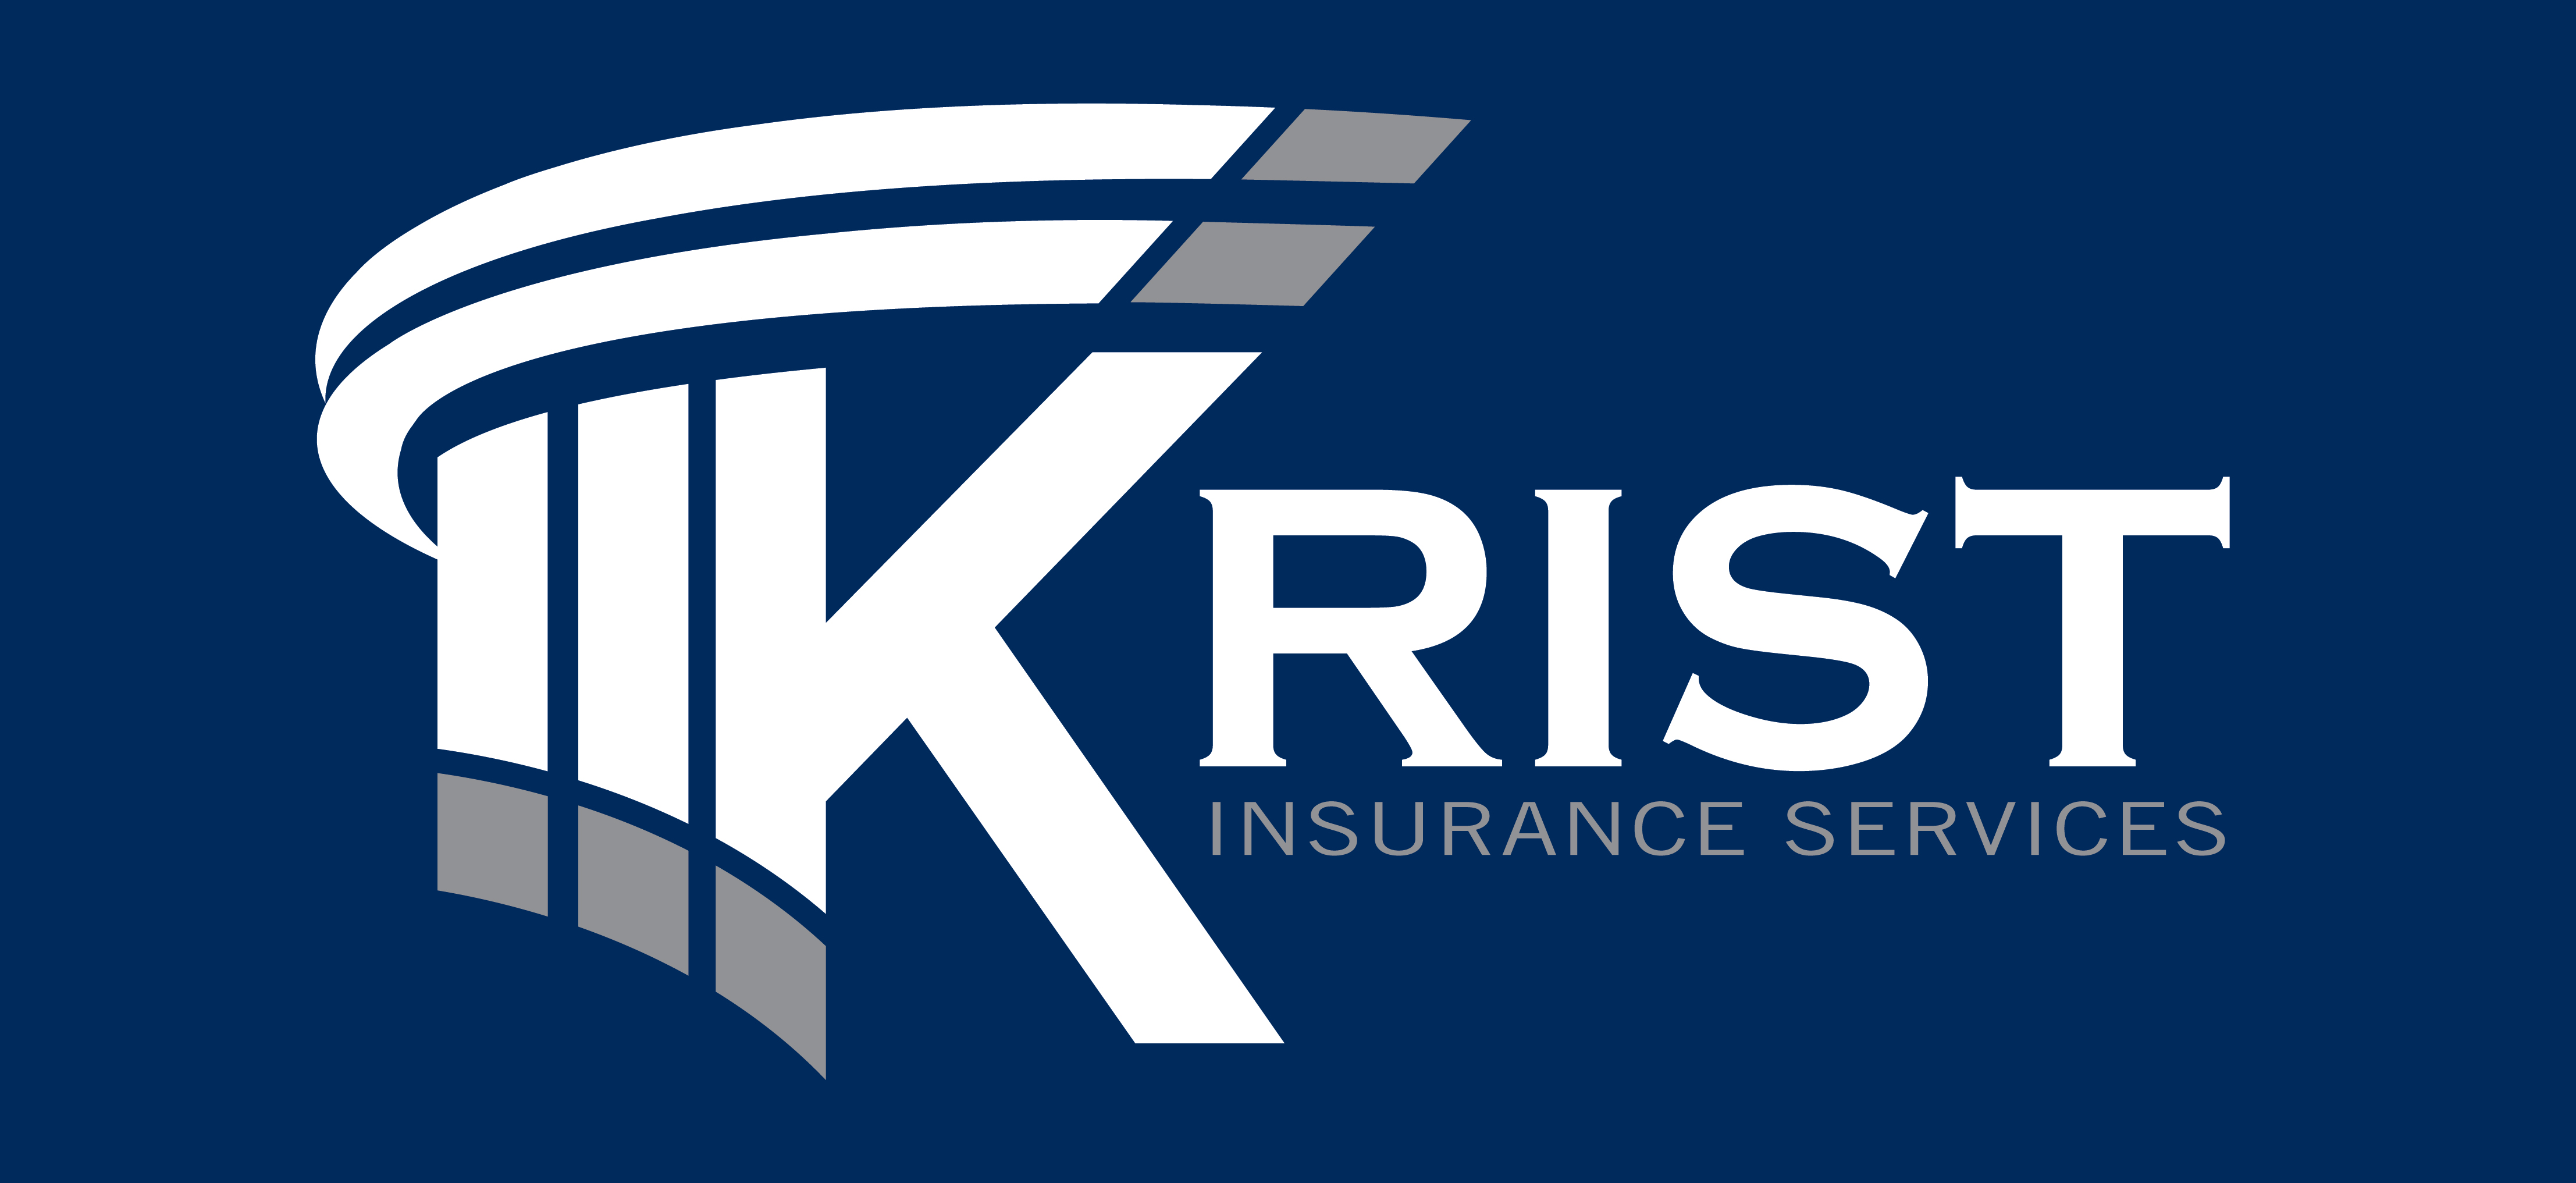 Visit http://www.kristinsurance.com/